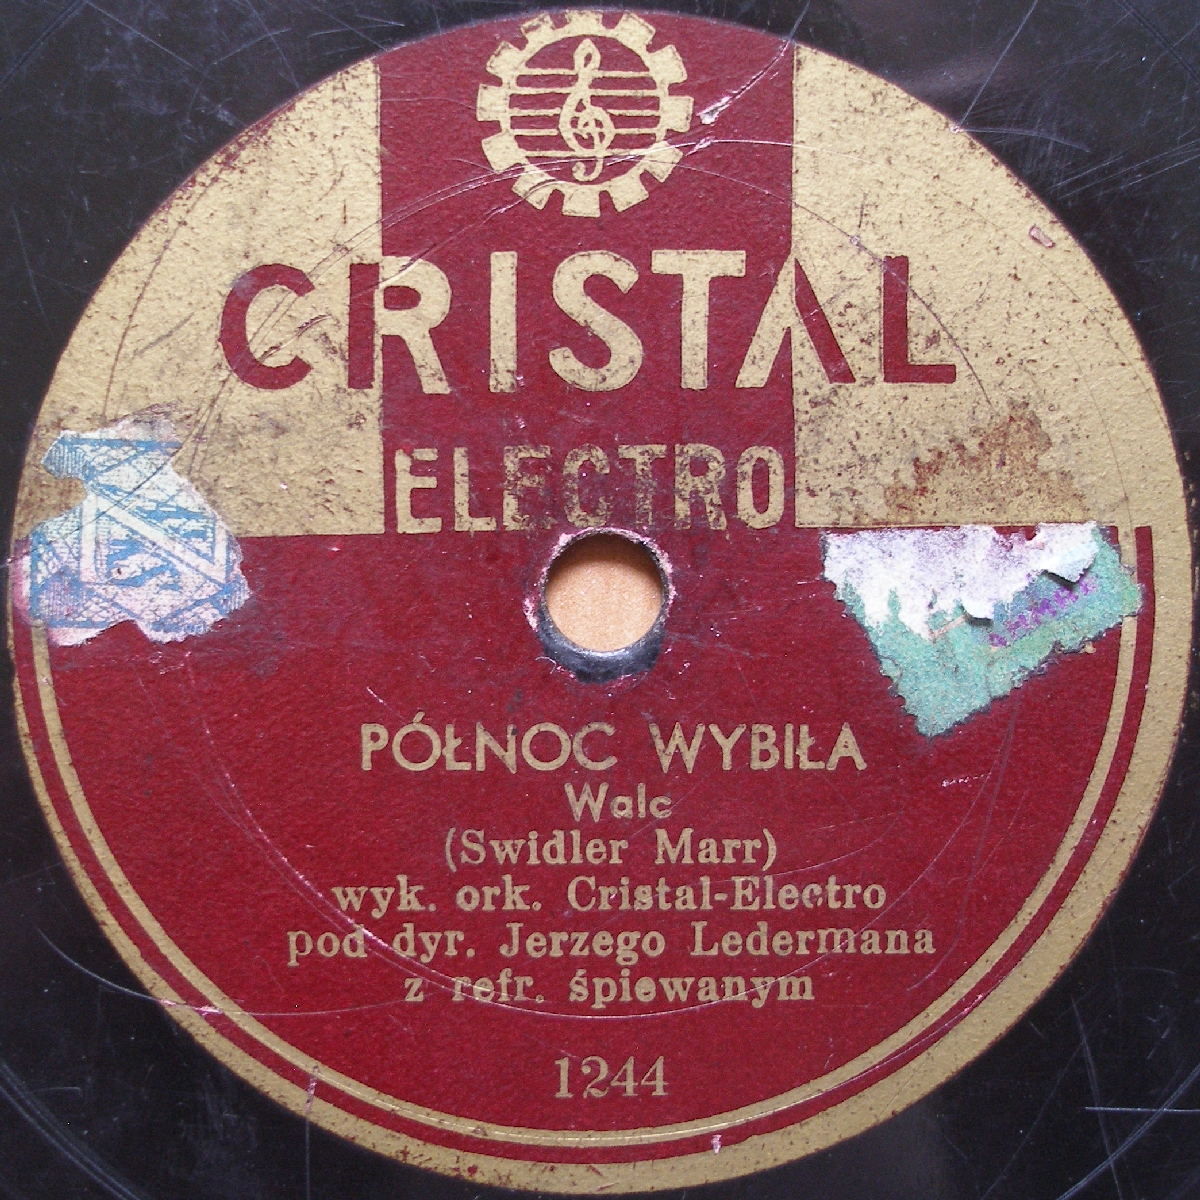 Cristal-Electro